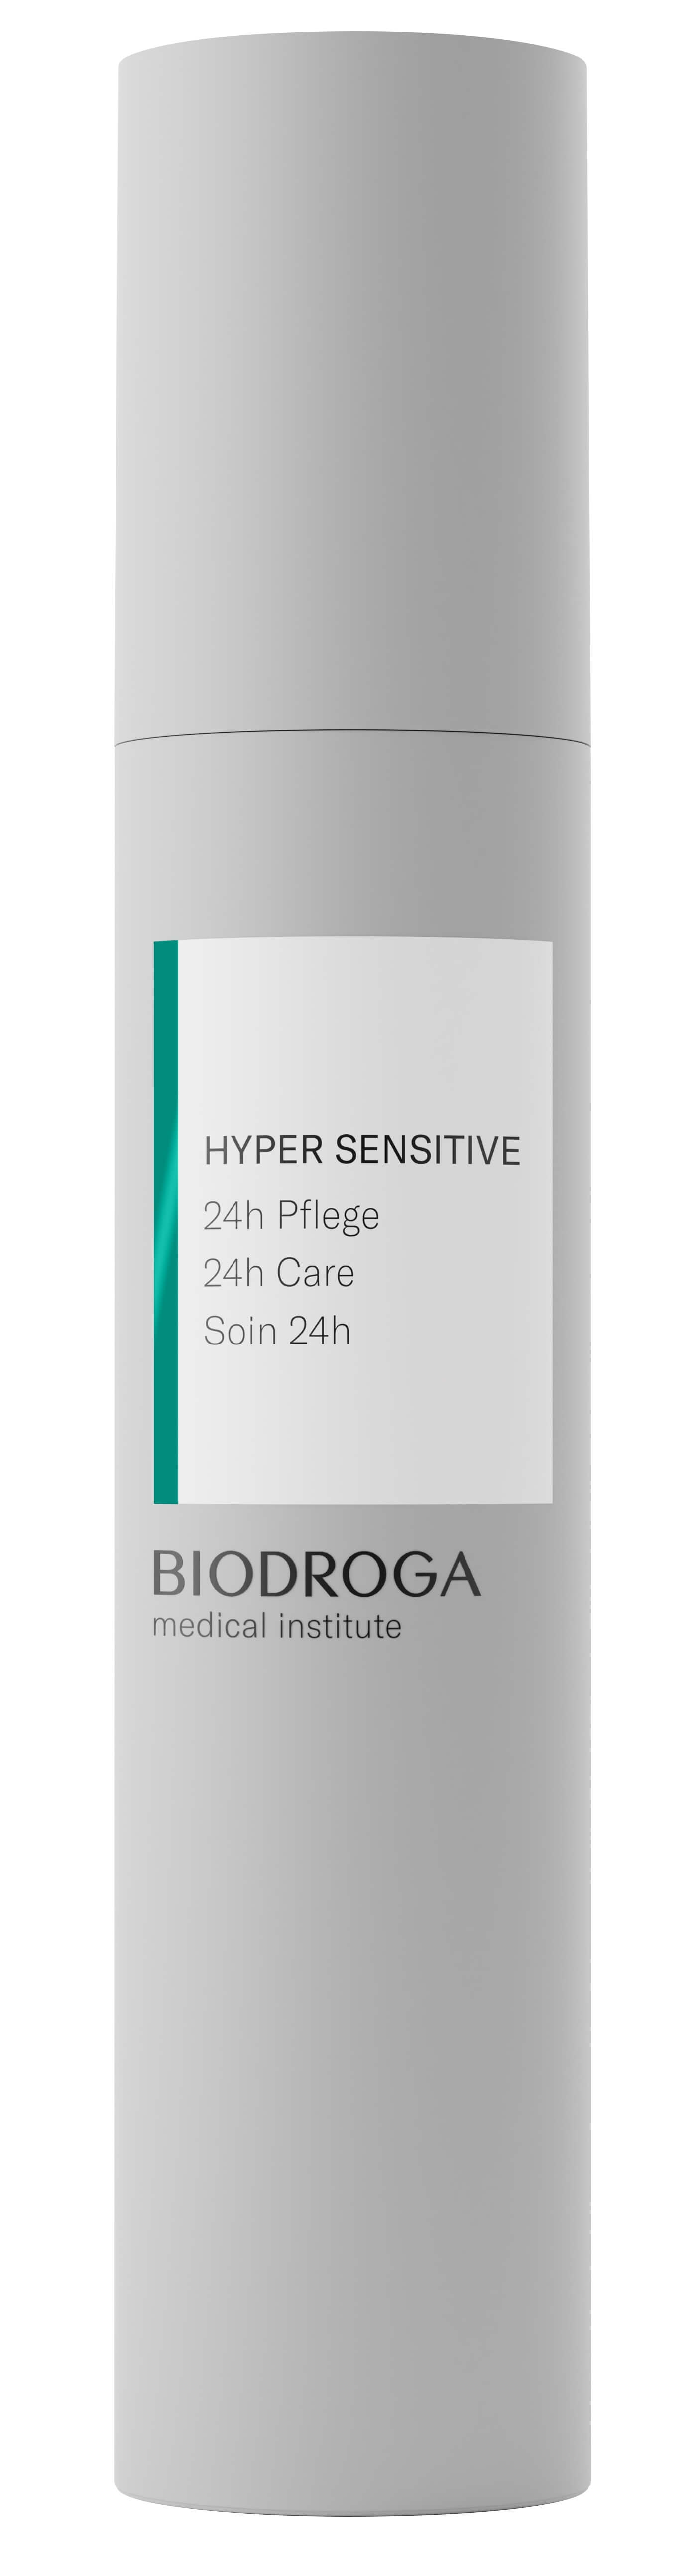 Biodroga Medical Institute Hyper Sensitive 24h Pflege 50 ml